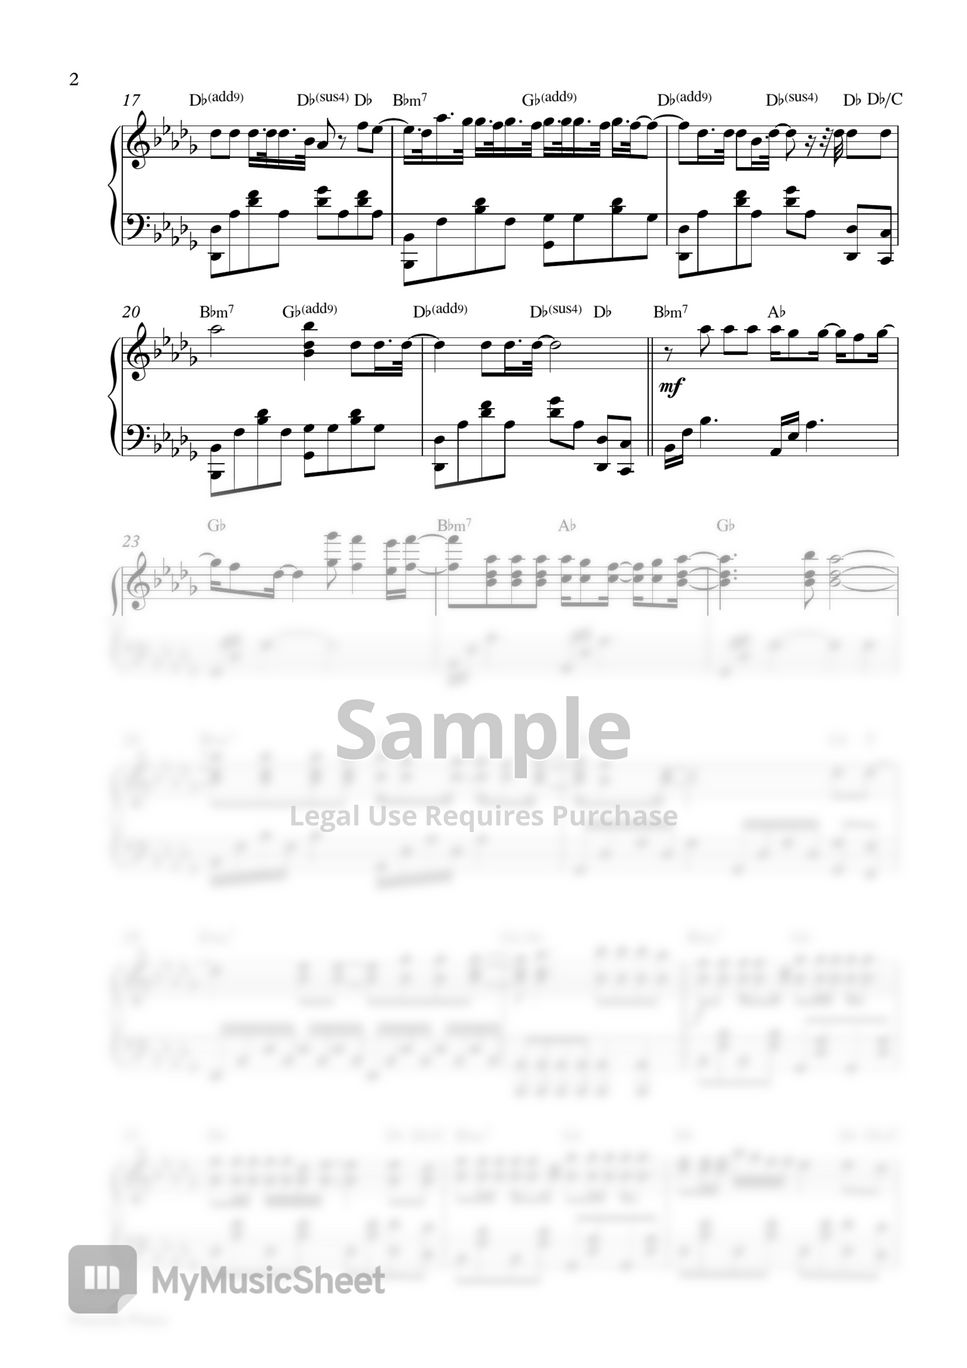 BLACKPINK - STAY (Piano Sheet) by Pianella Piano